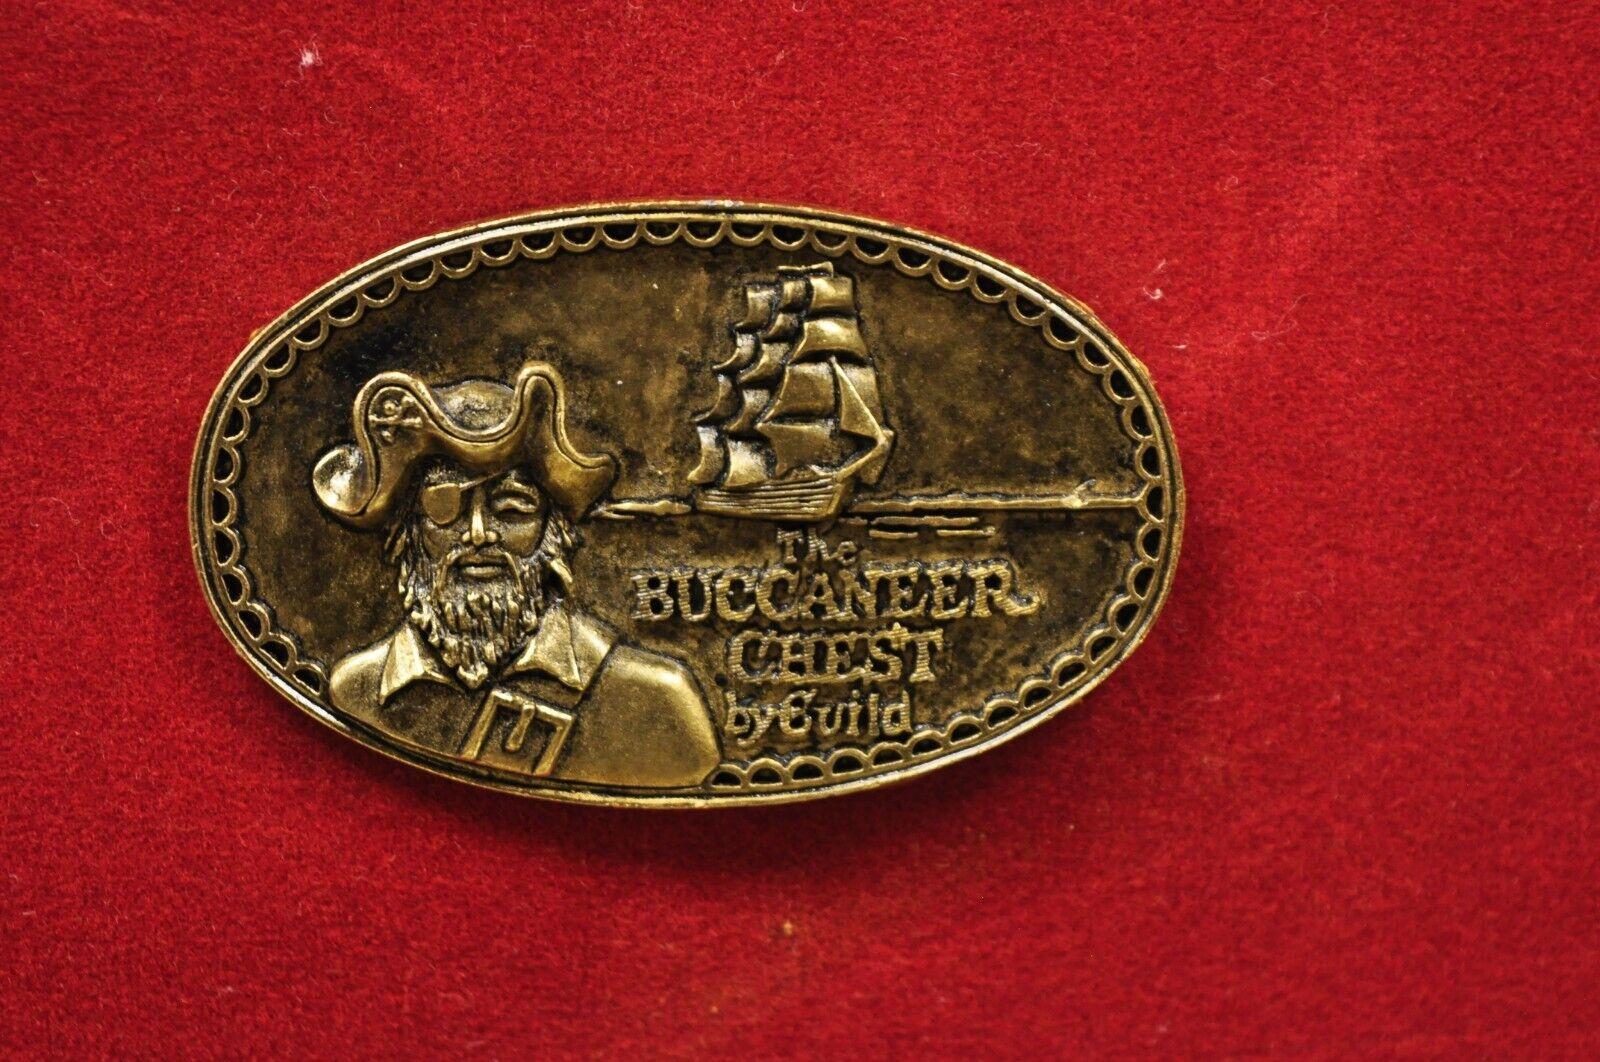 Buccaneer Chest by Guild Vintage AM/FM Radio Pirate Treasure Chest Radio 1